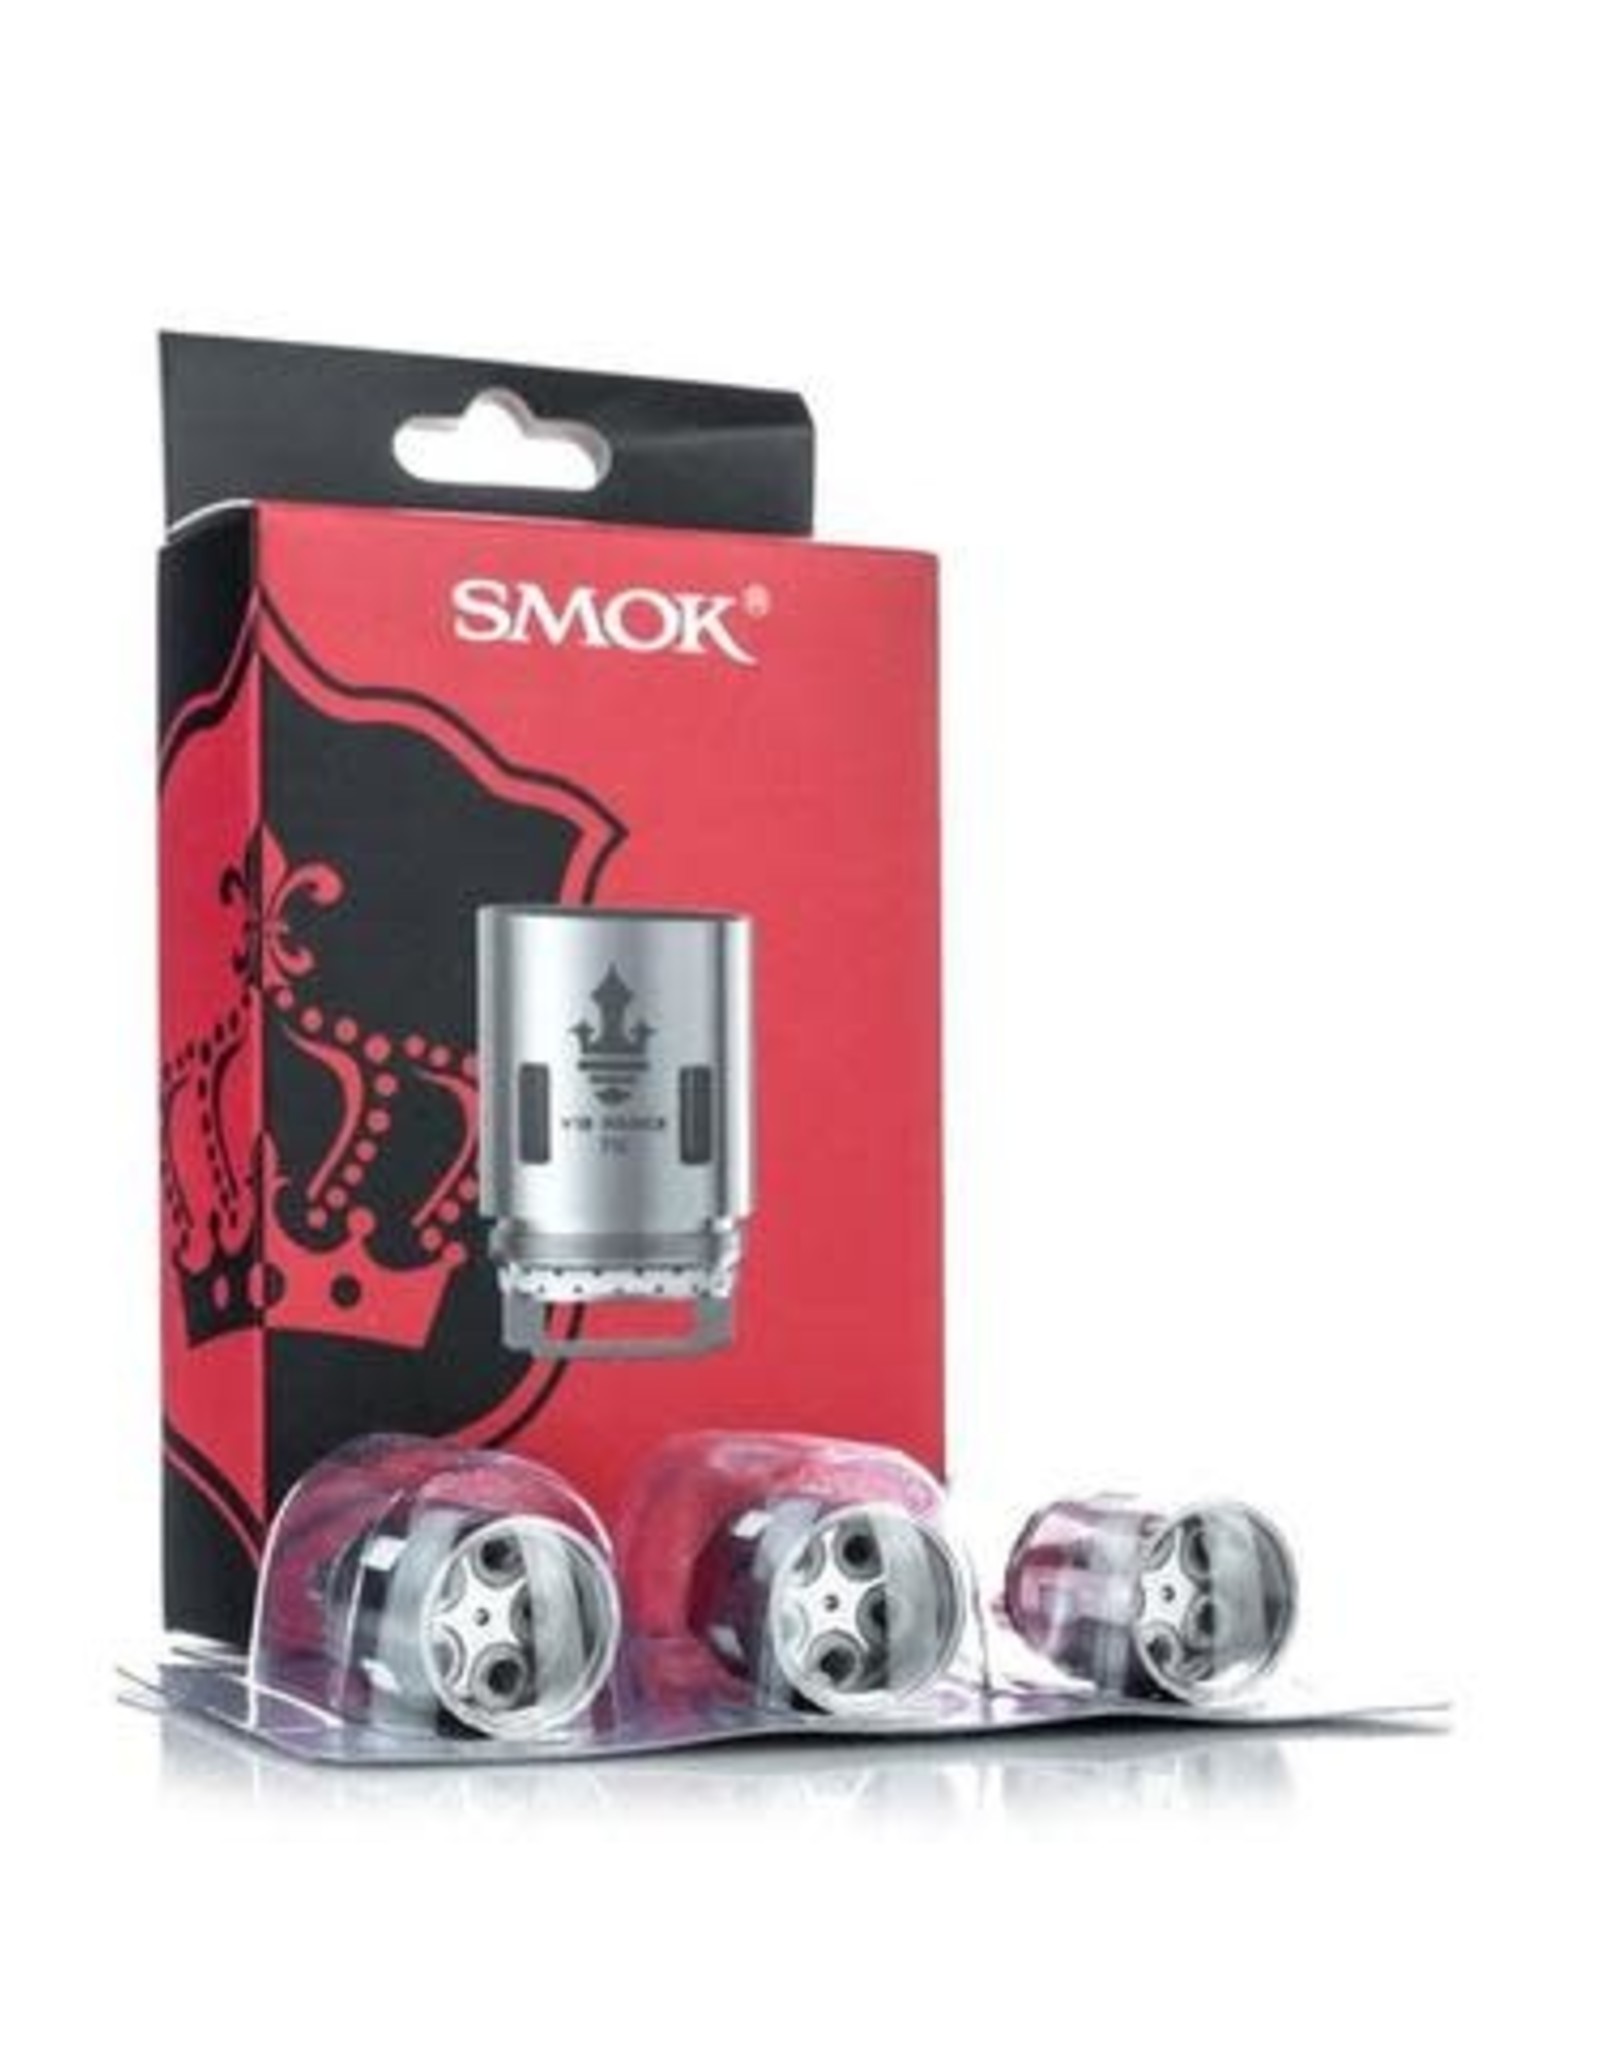 Smok Smok V12 P-Tank (Prince) Coils (3 Pack)